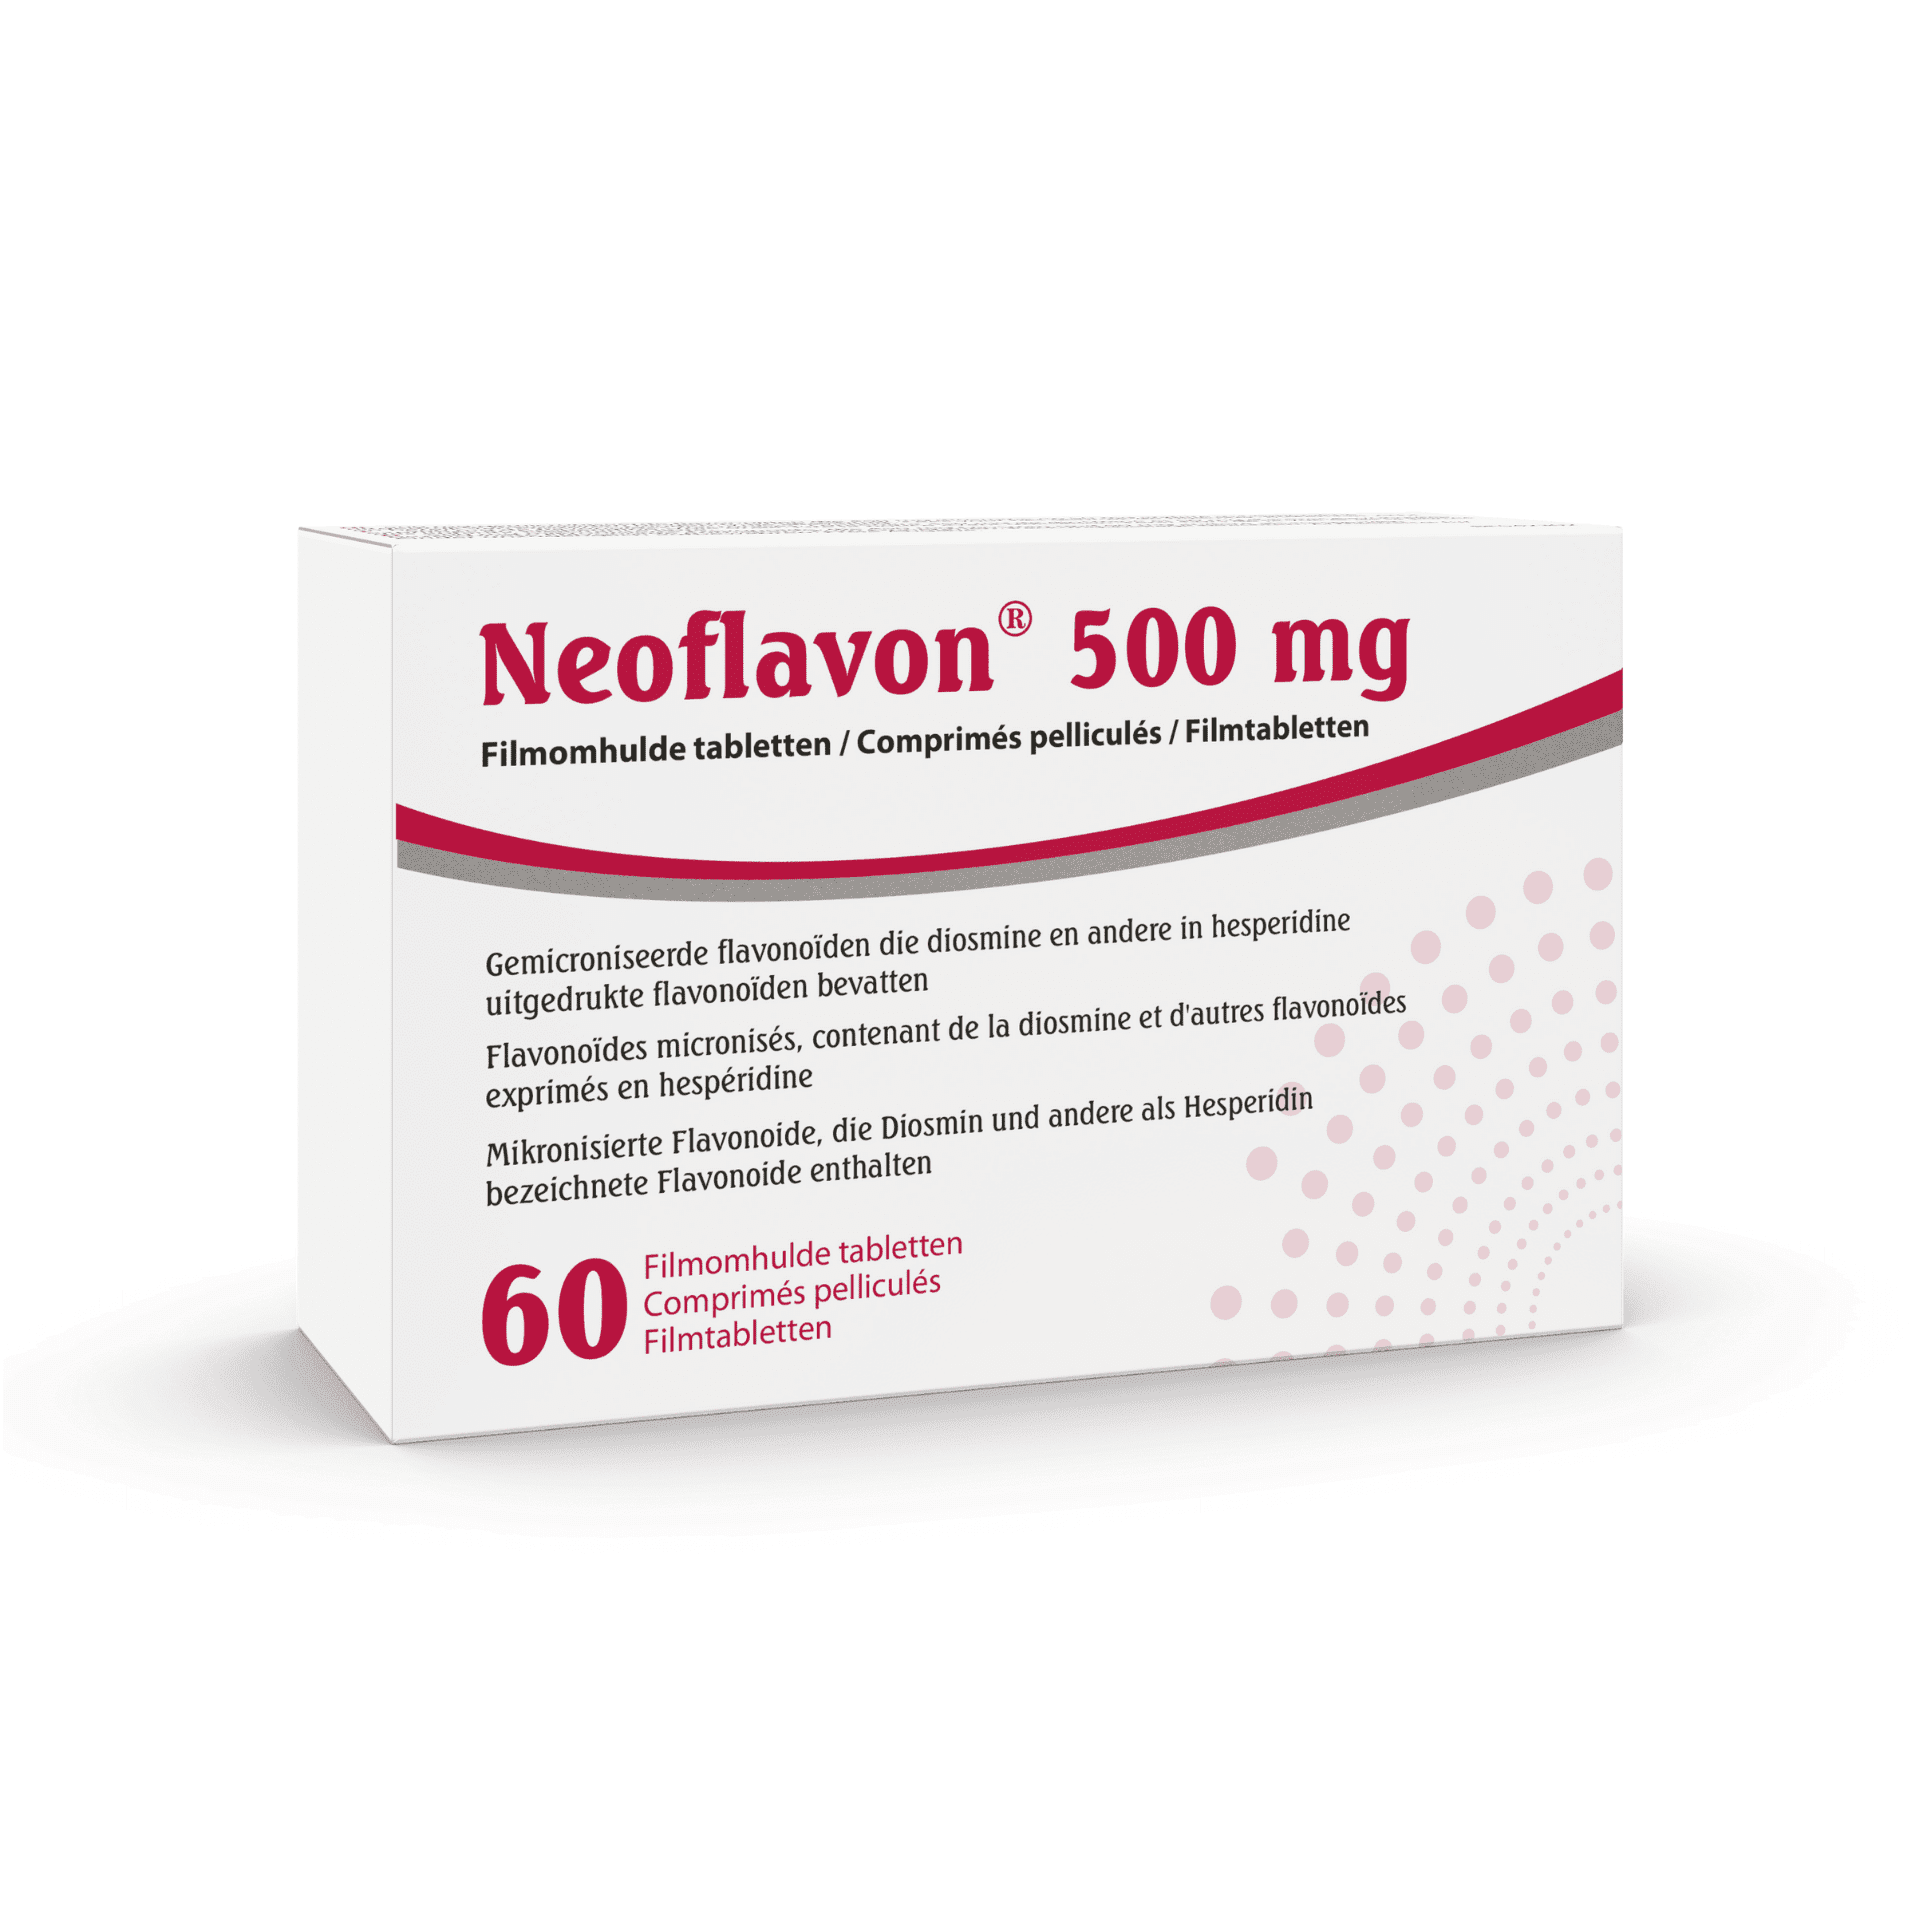 Neoflavon 500 mg 60 comprimes